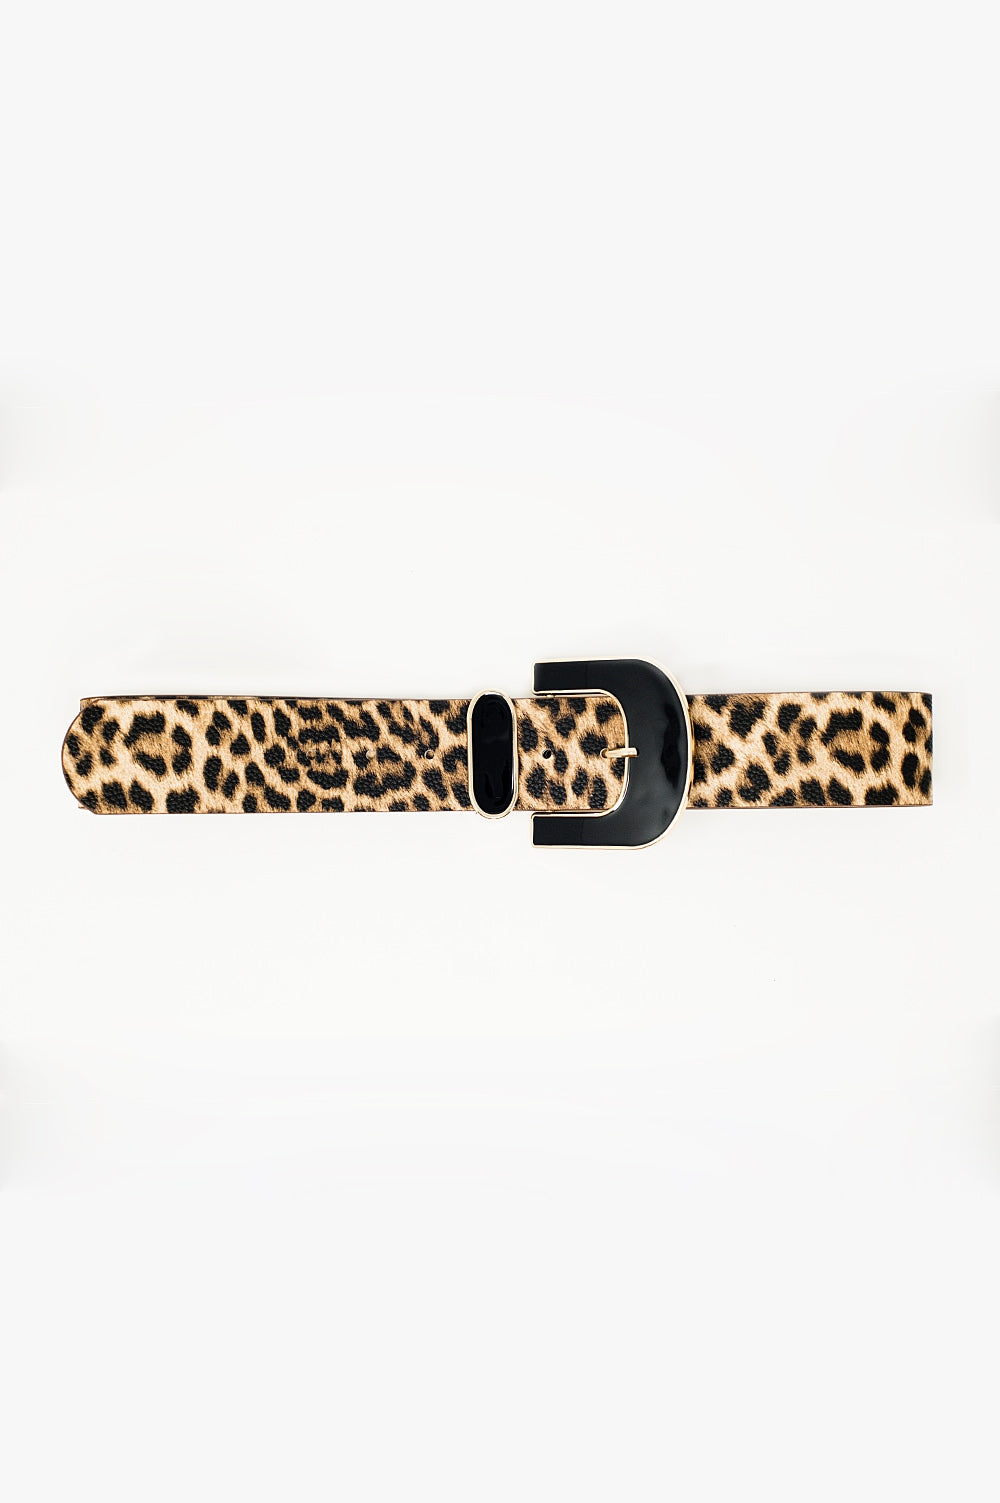 Q2 Leopard print belt in brown color